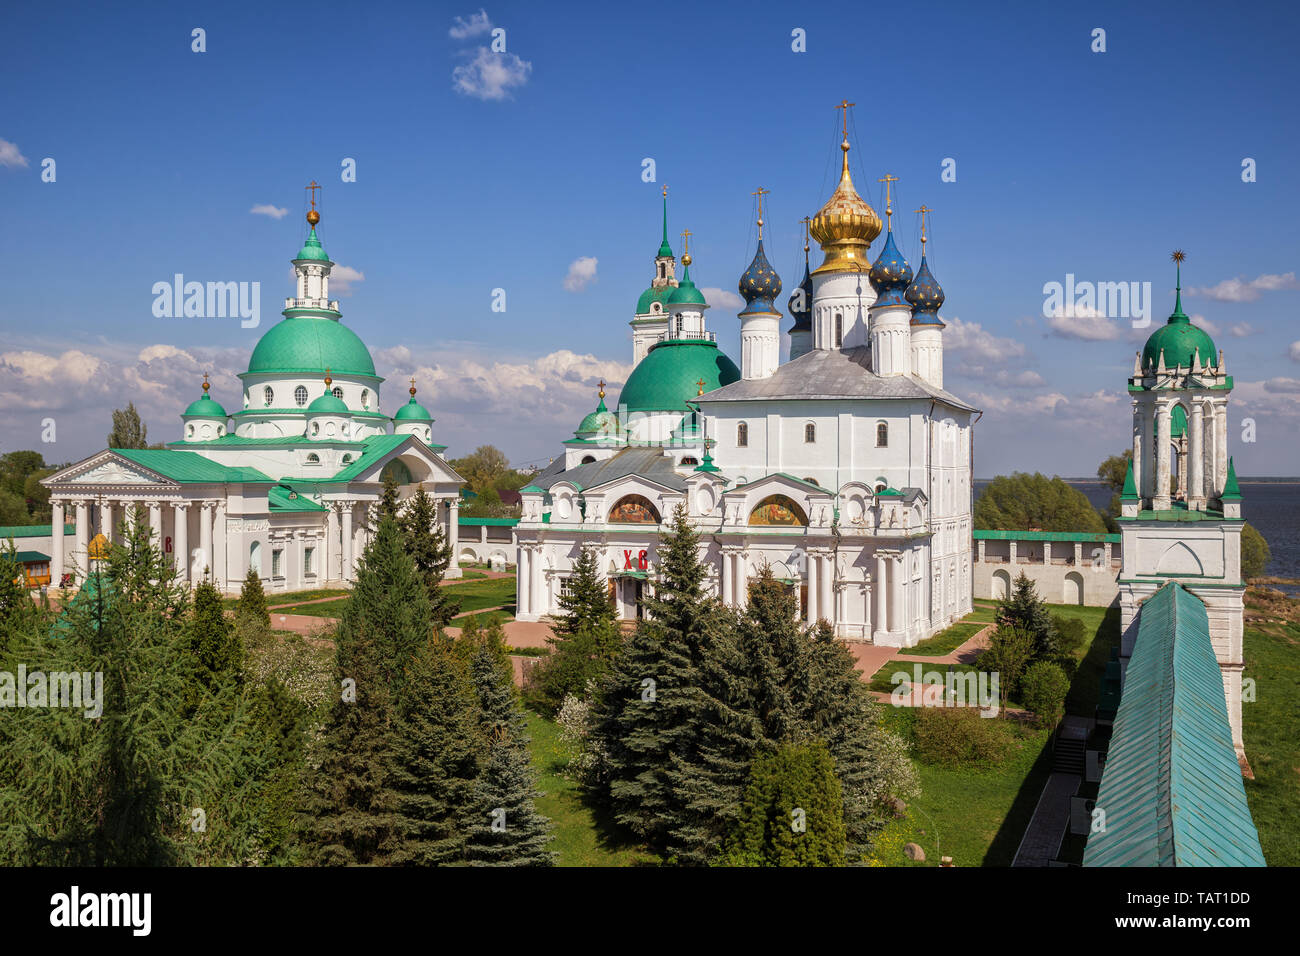 Spaso-Yakovlevsky Monastery or Monastery of St. Jacob Saviour in Rostov Veliky, the Golden Ring of Russia Stock Photo